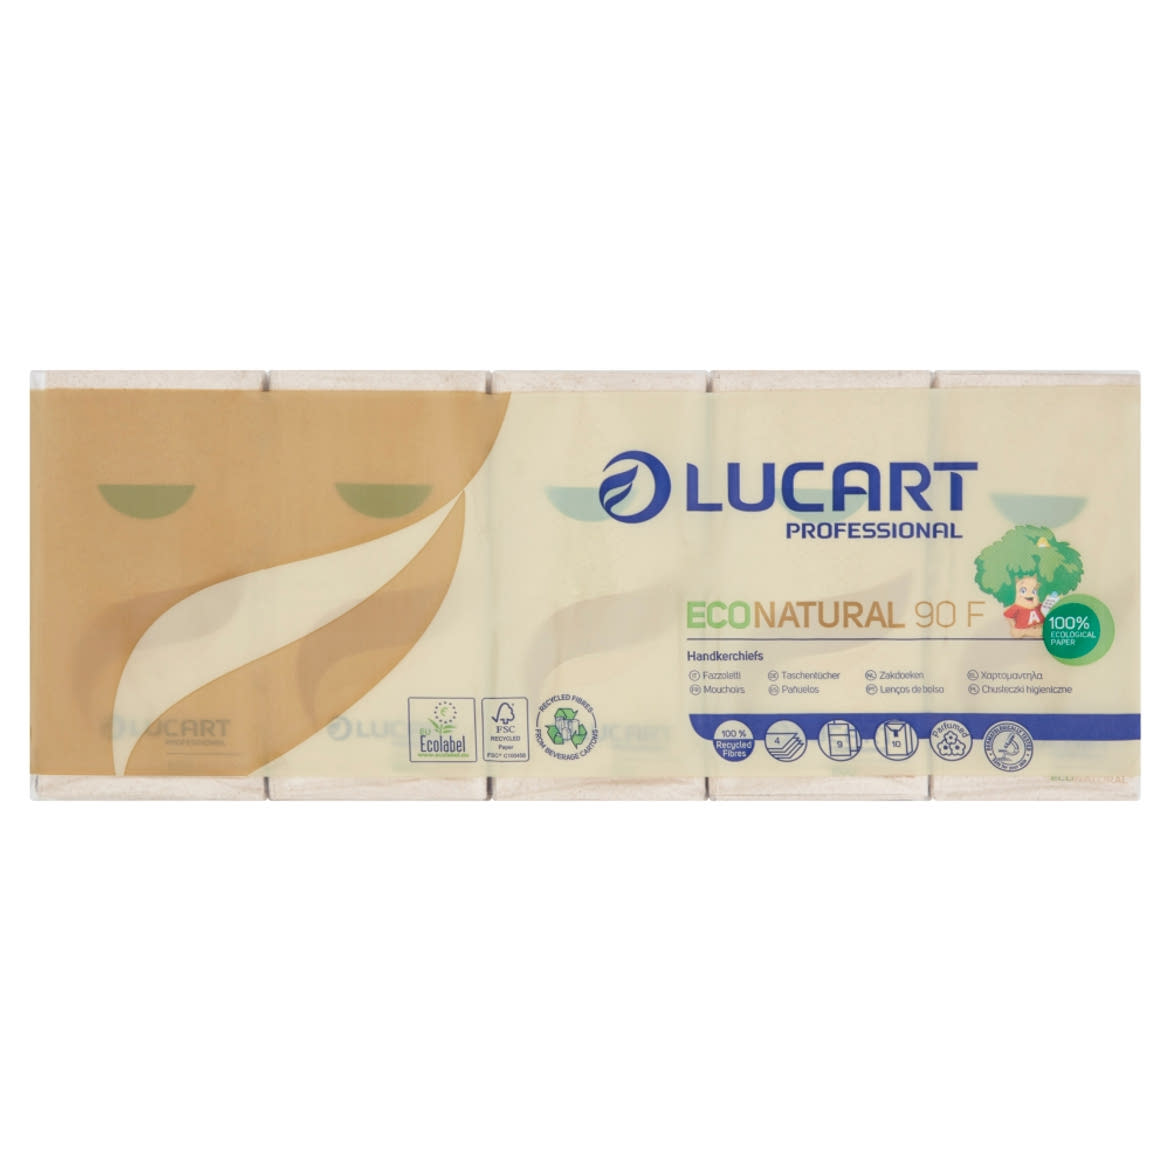 Lucart Professional Econatural 90F papírzsebkendő 4 rétegű 9X10 db